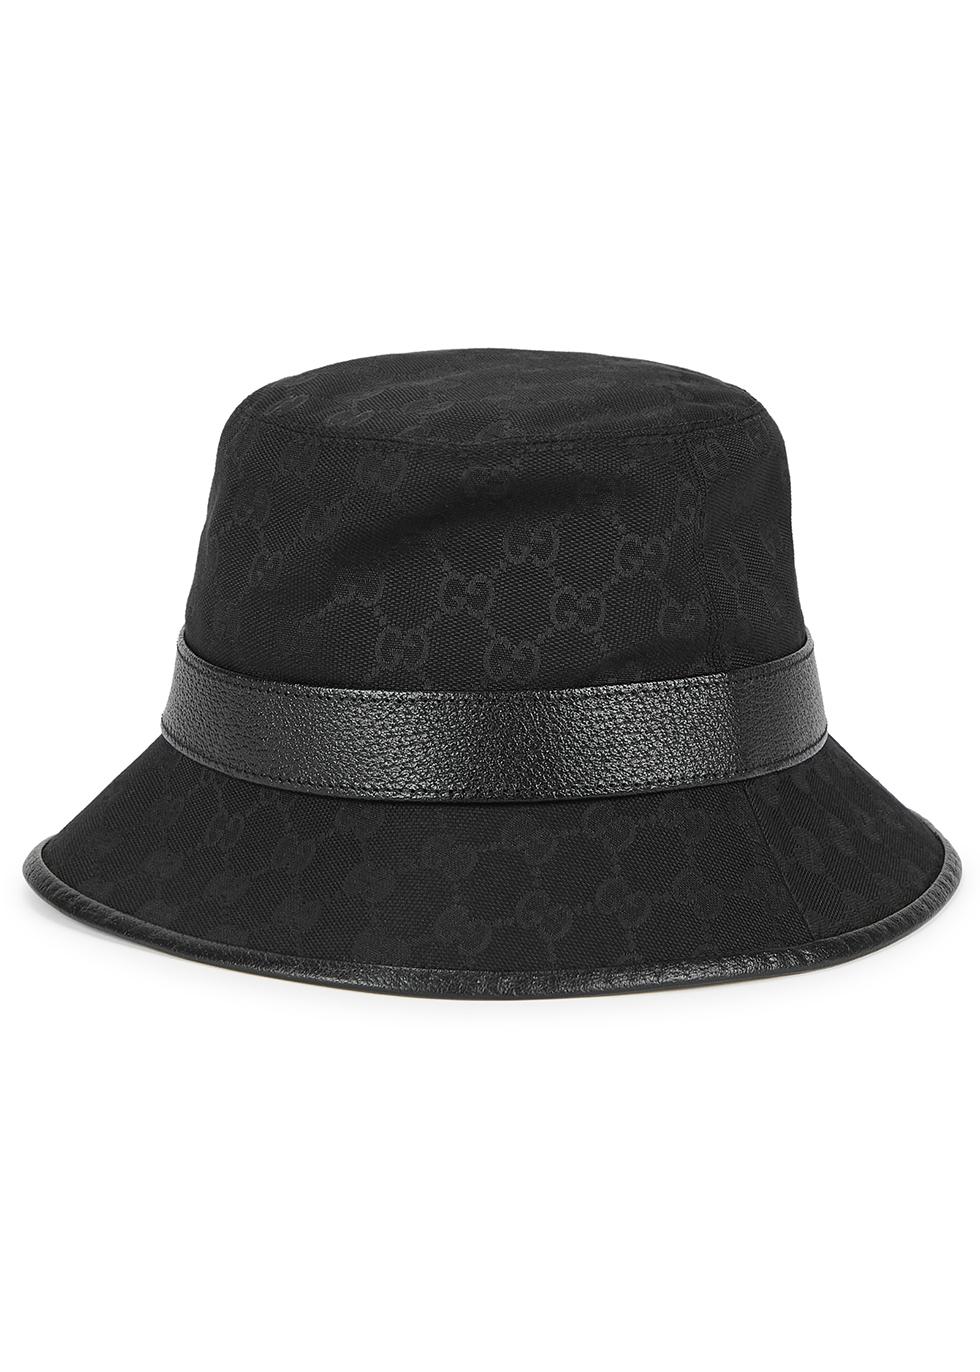 Gucci GG Monogrammed Canvas Bucket Hat in Black for Men - Lyst